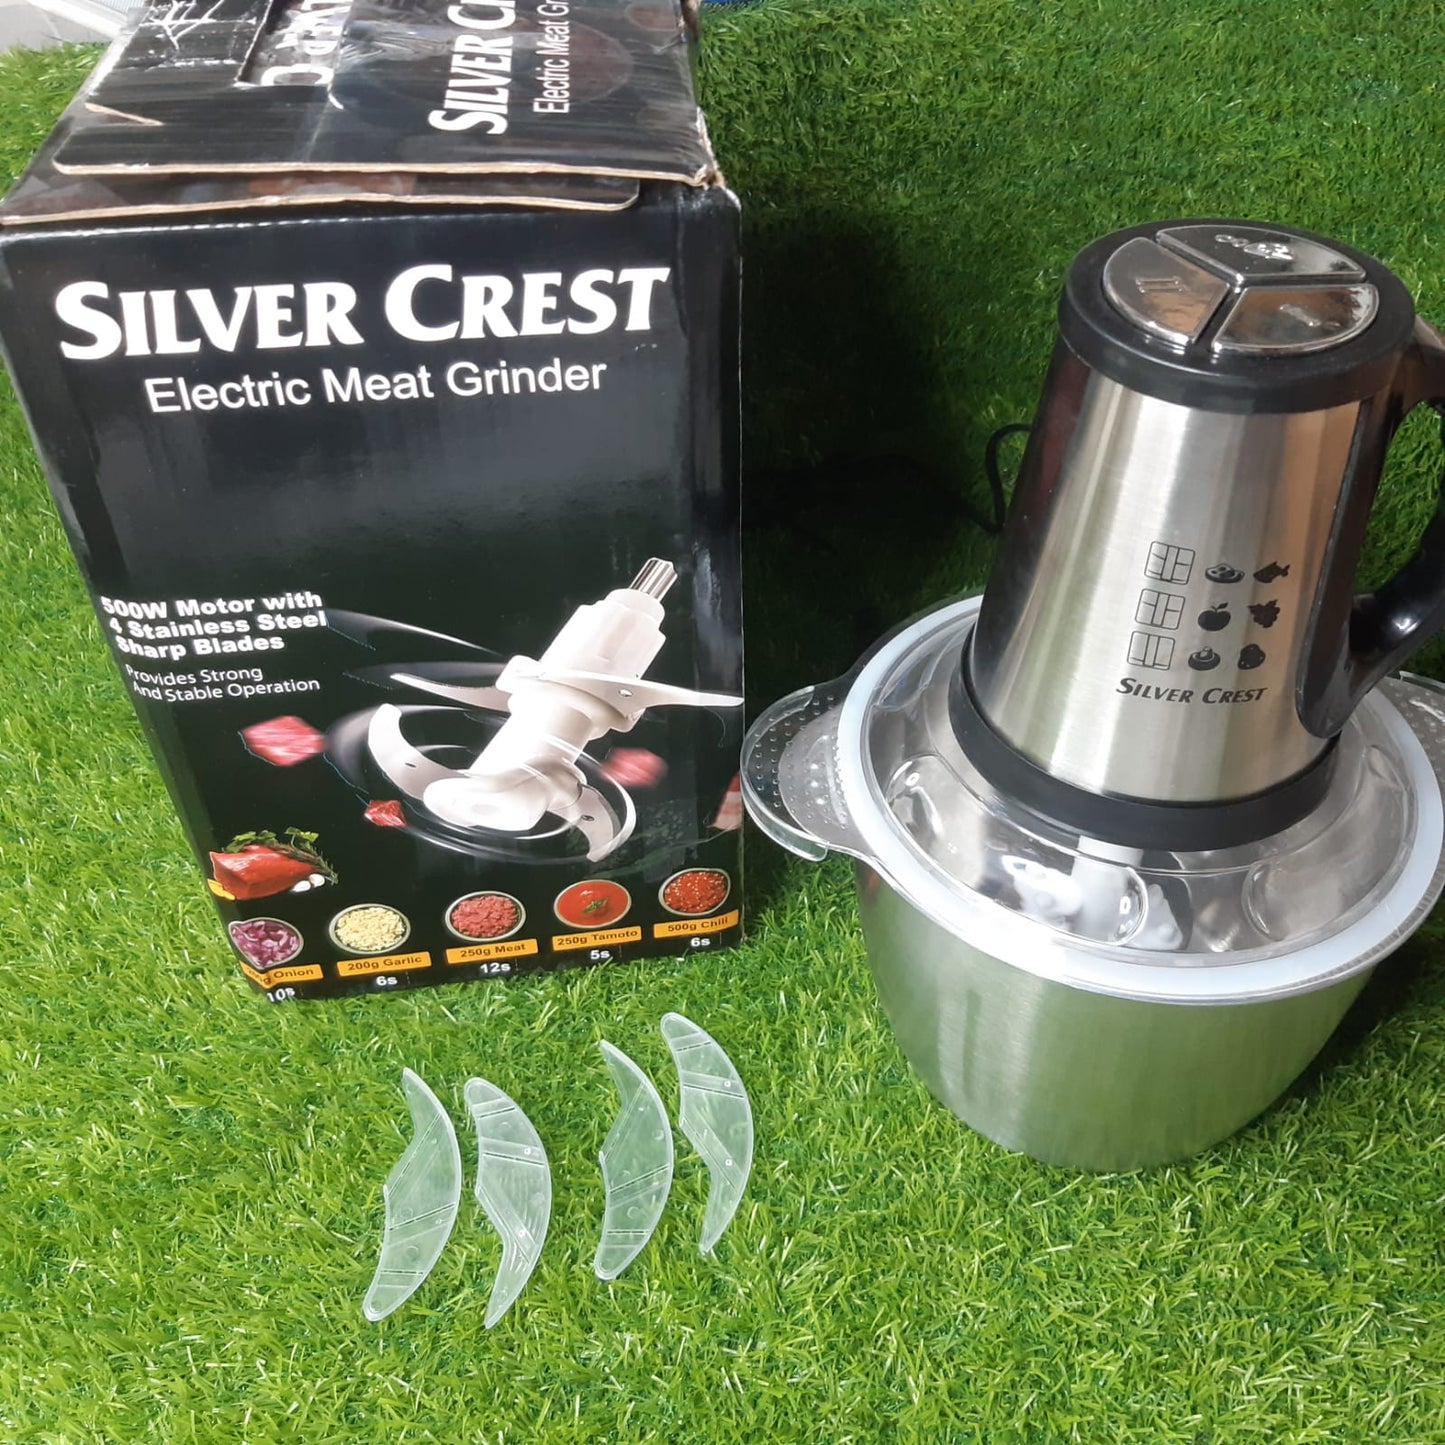 Silver Crest 3L Chopper -- Electric Meat Grinder